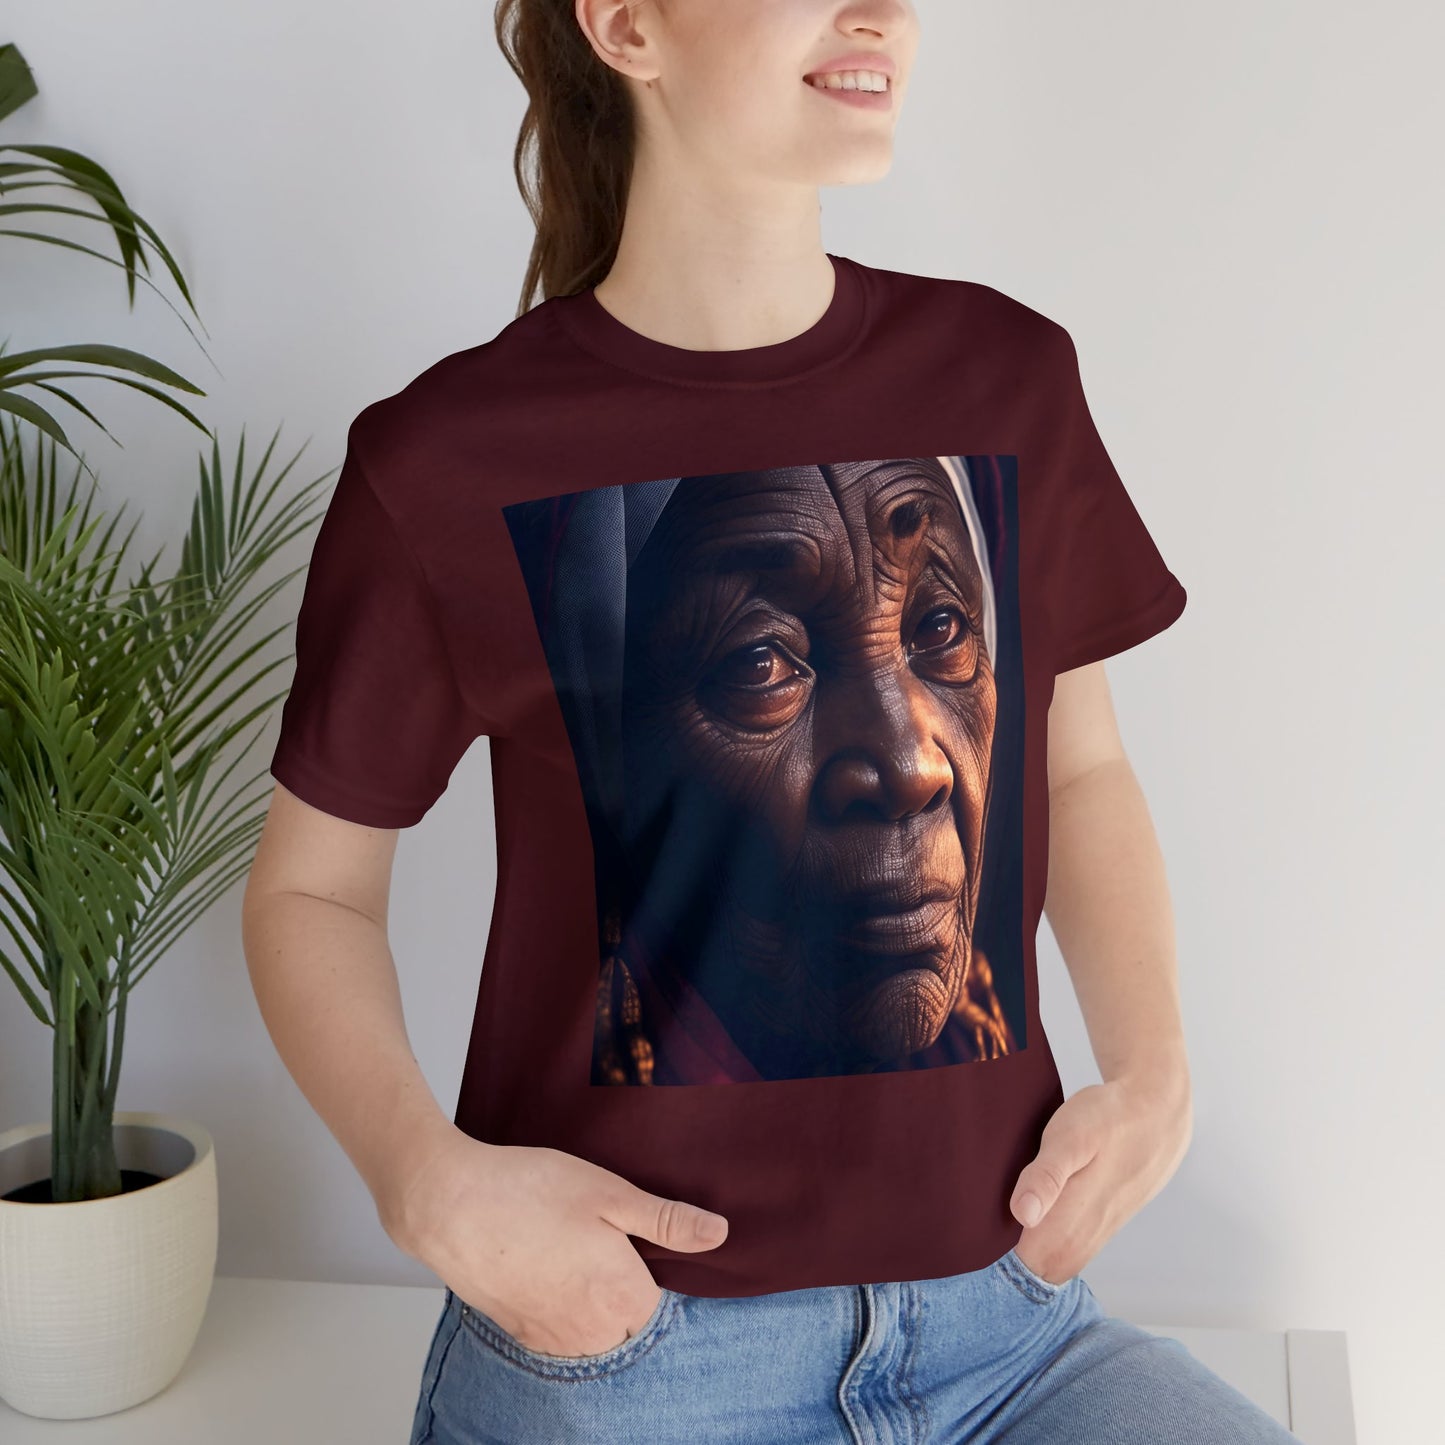 Wisdom's Face | African Woman | HD | Photorealistic | Unisex | Men's | Women's | Tee | T-Shirt